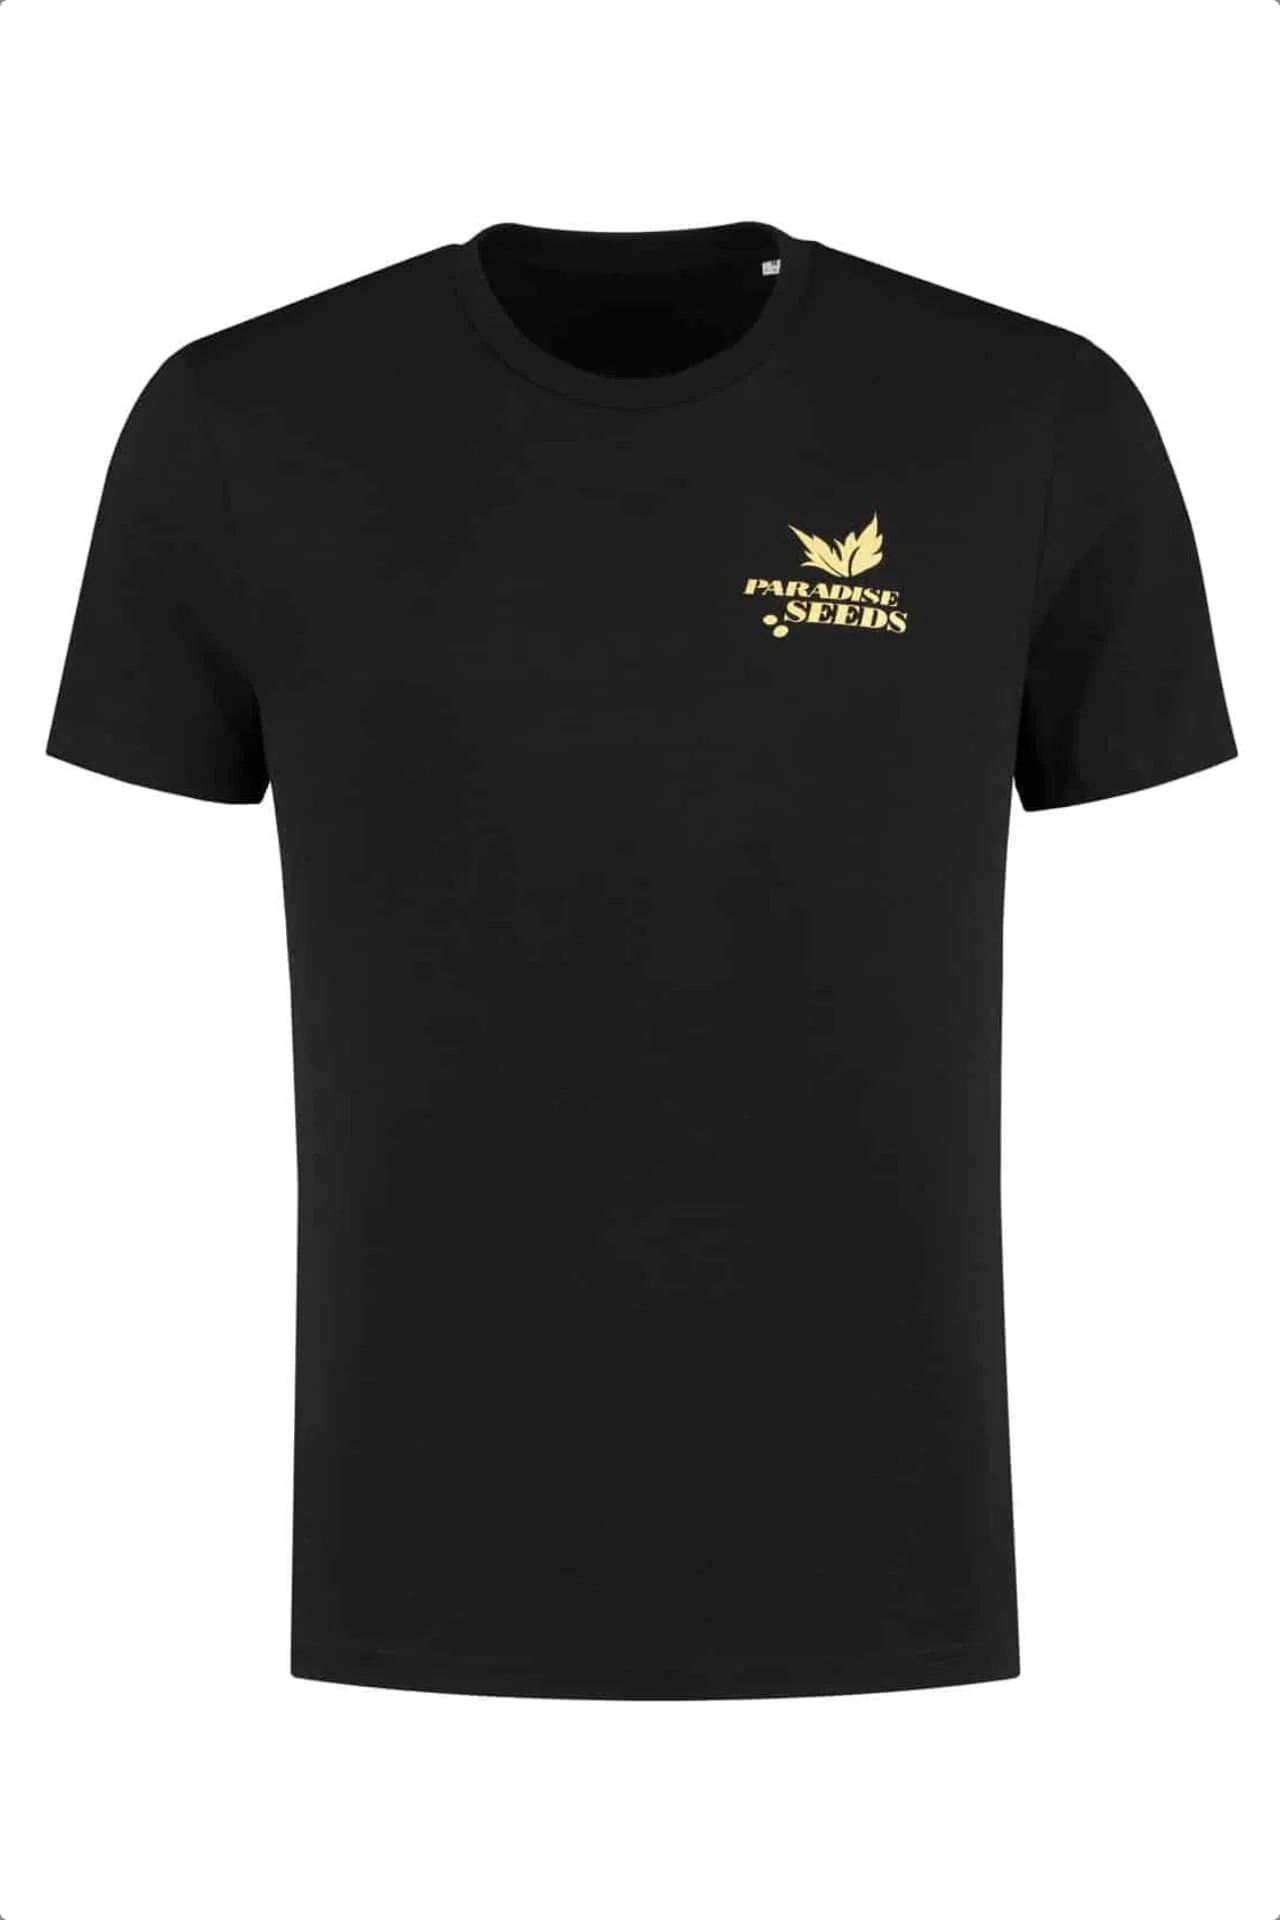 Camiseta para hombre con logo dorado de Paradise Seeds | Paradise Seeds Webshop